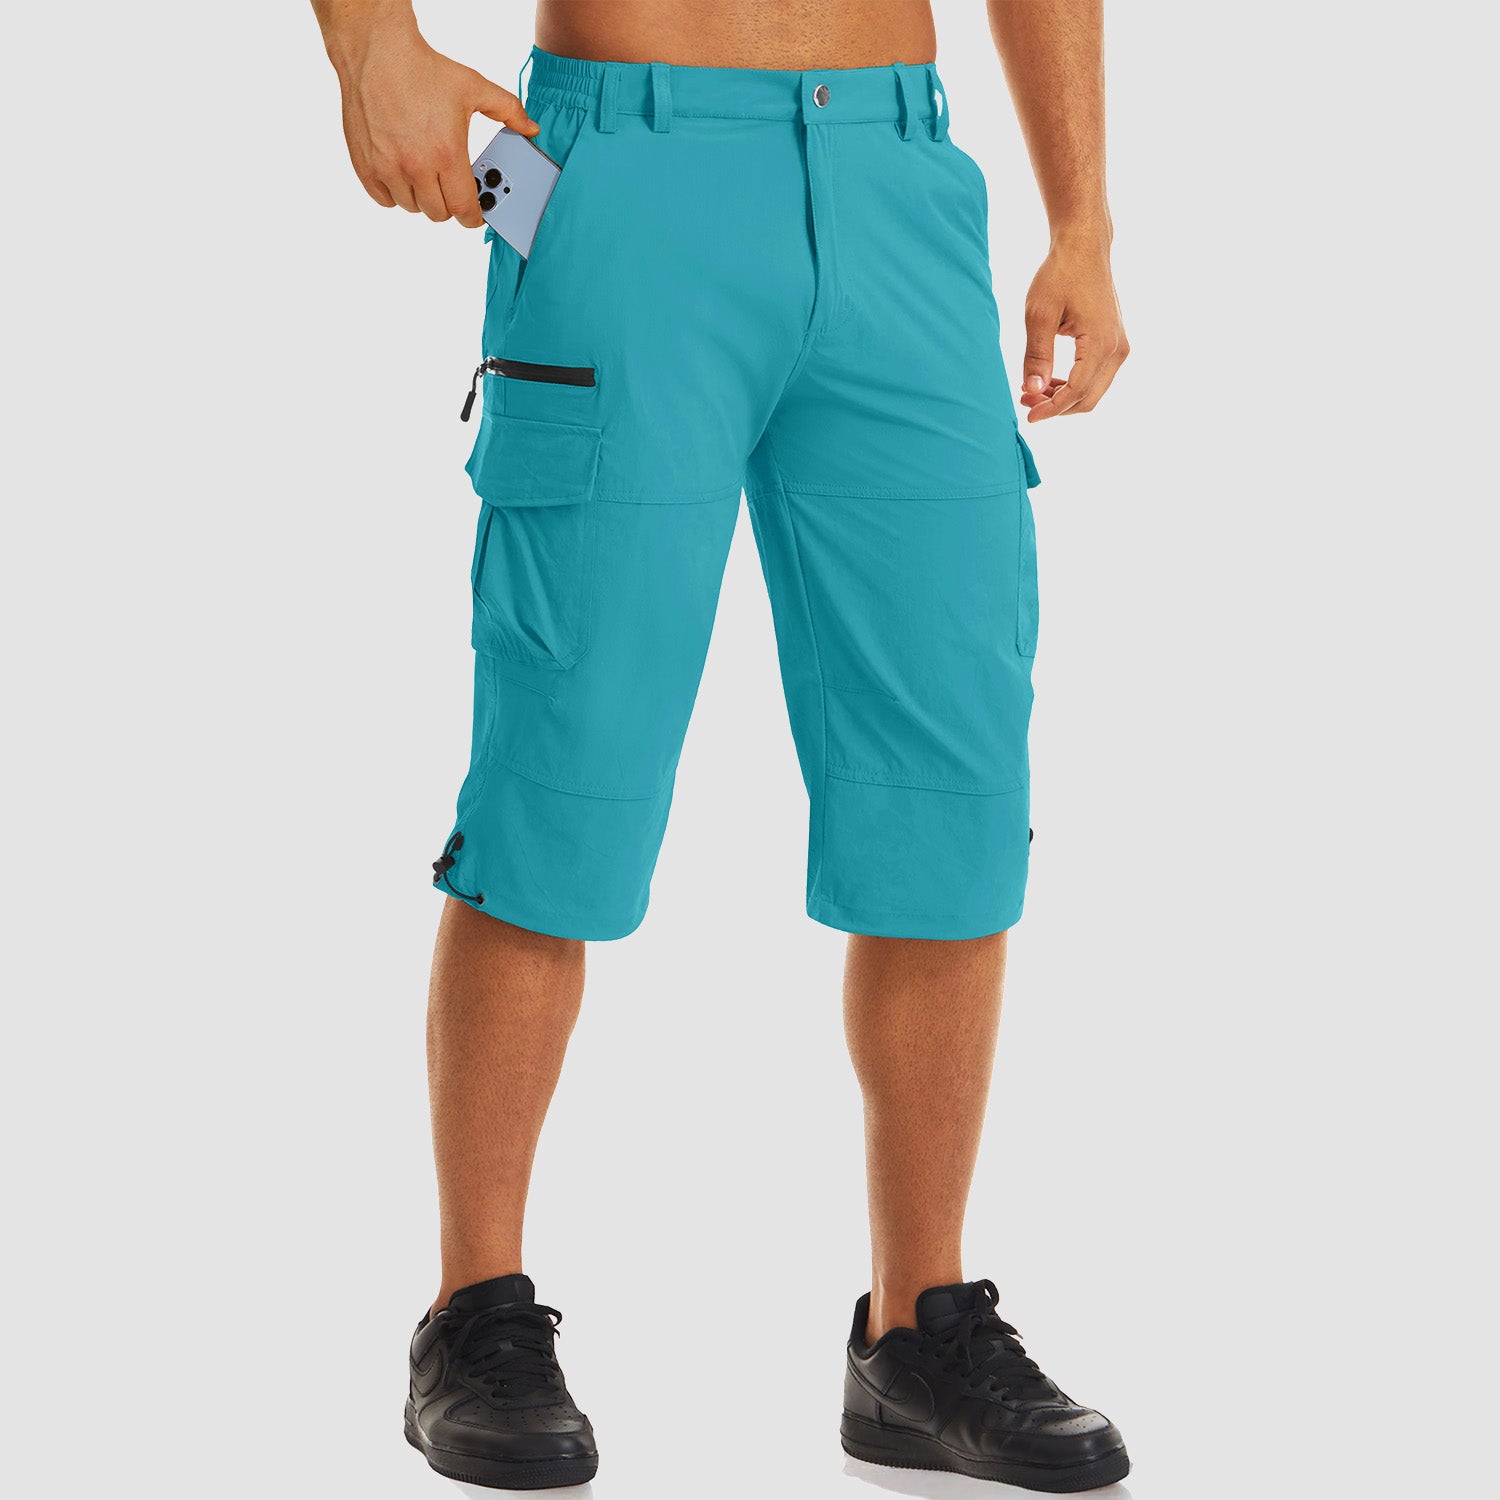 MAGCOMSEN Men's Capri Shorts Quick Dry Below Knee 3/4 Capri Pants with  Zipper Pockets for Workout Running Training Summer